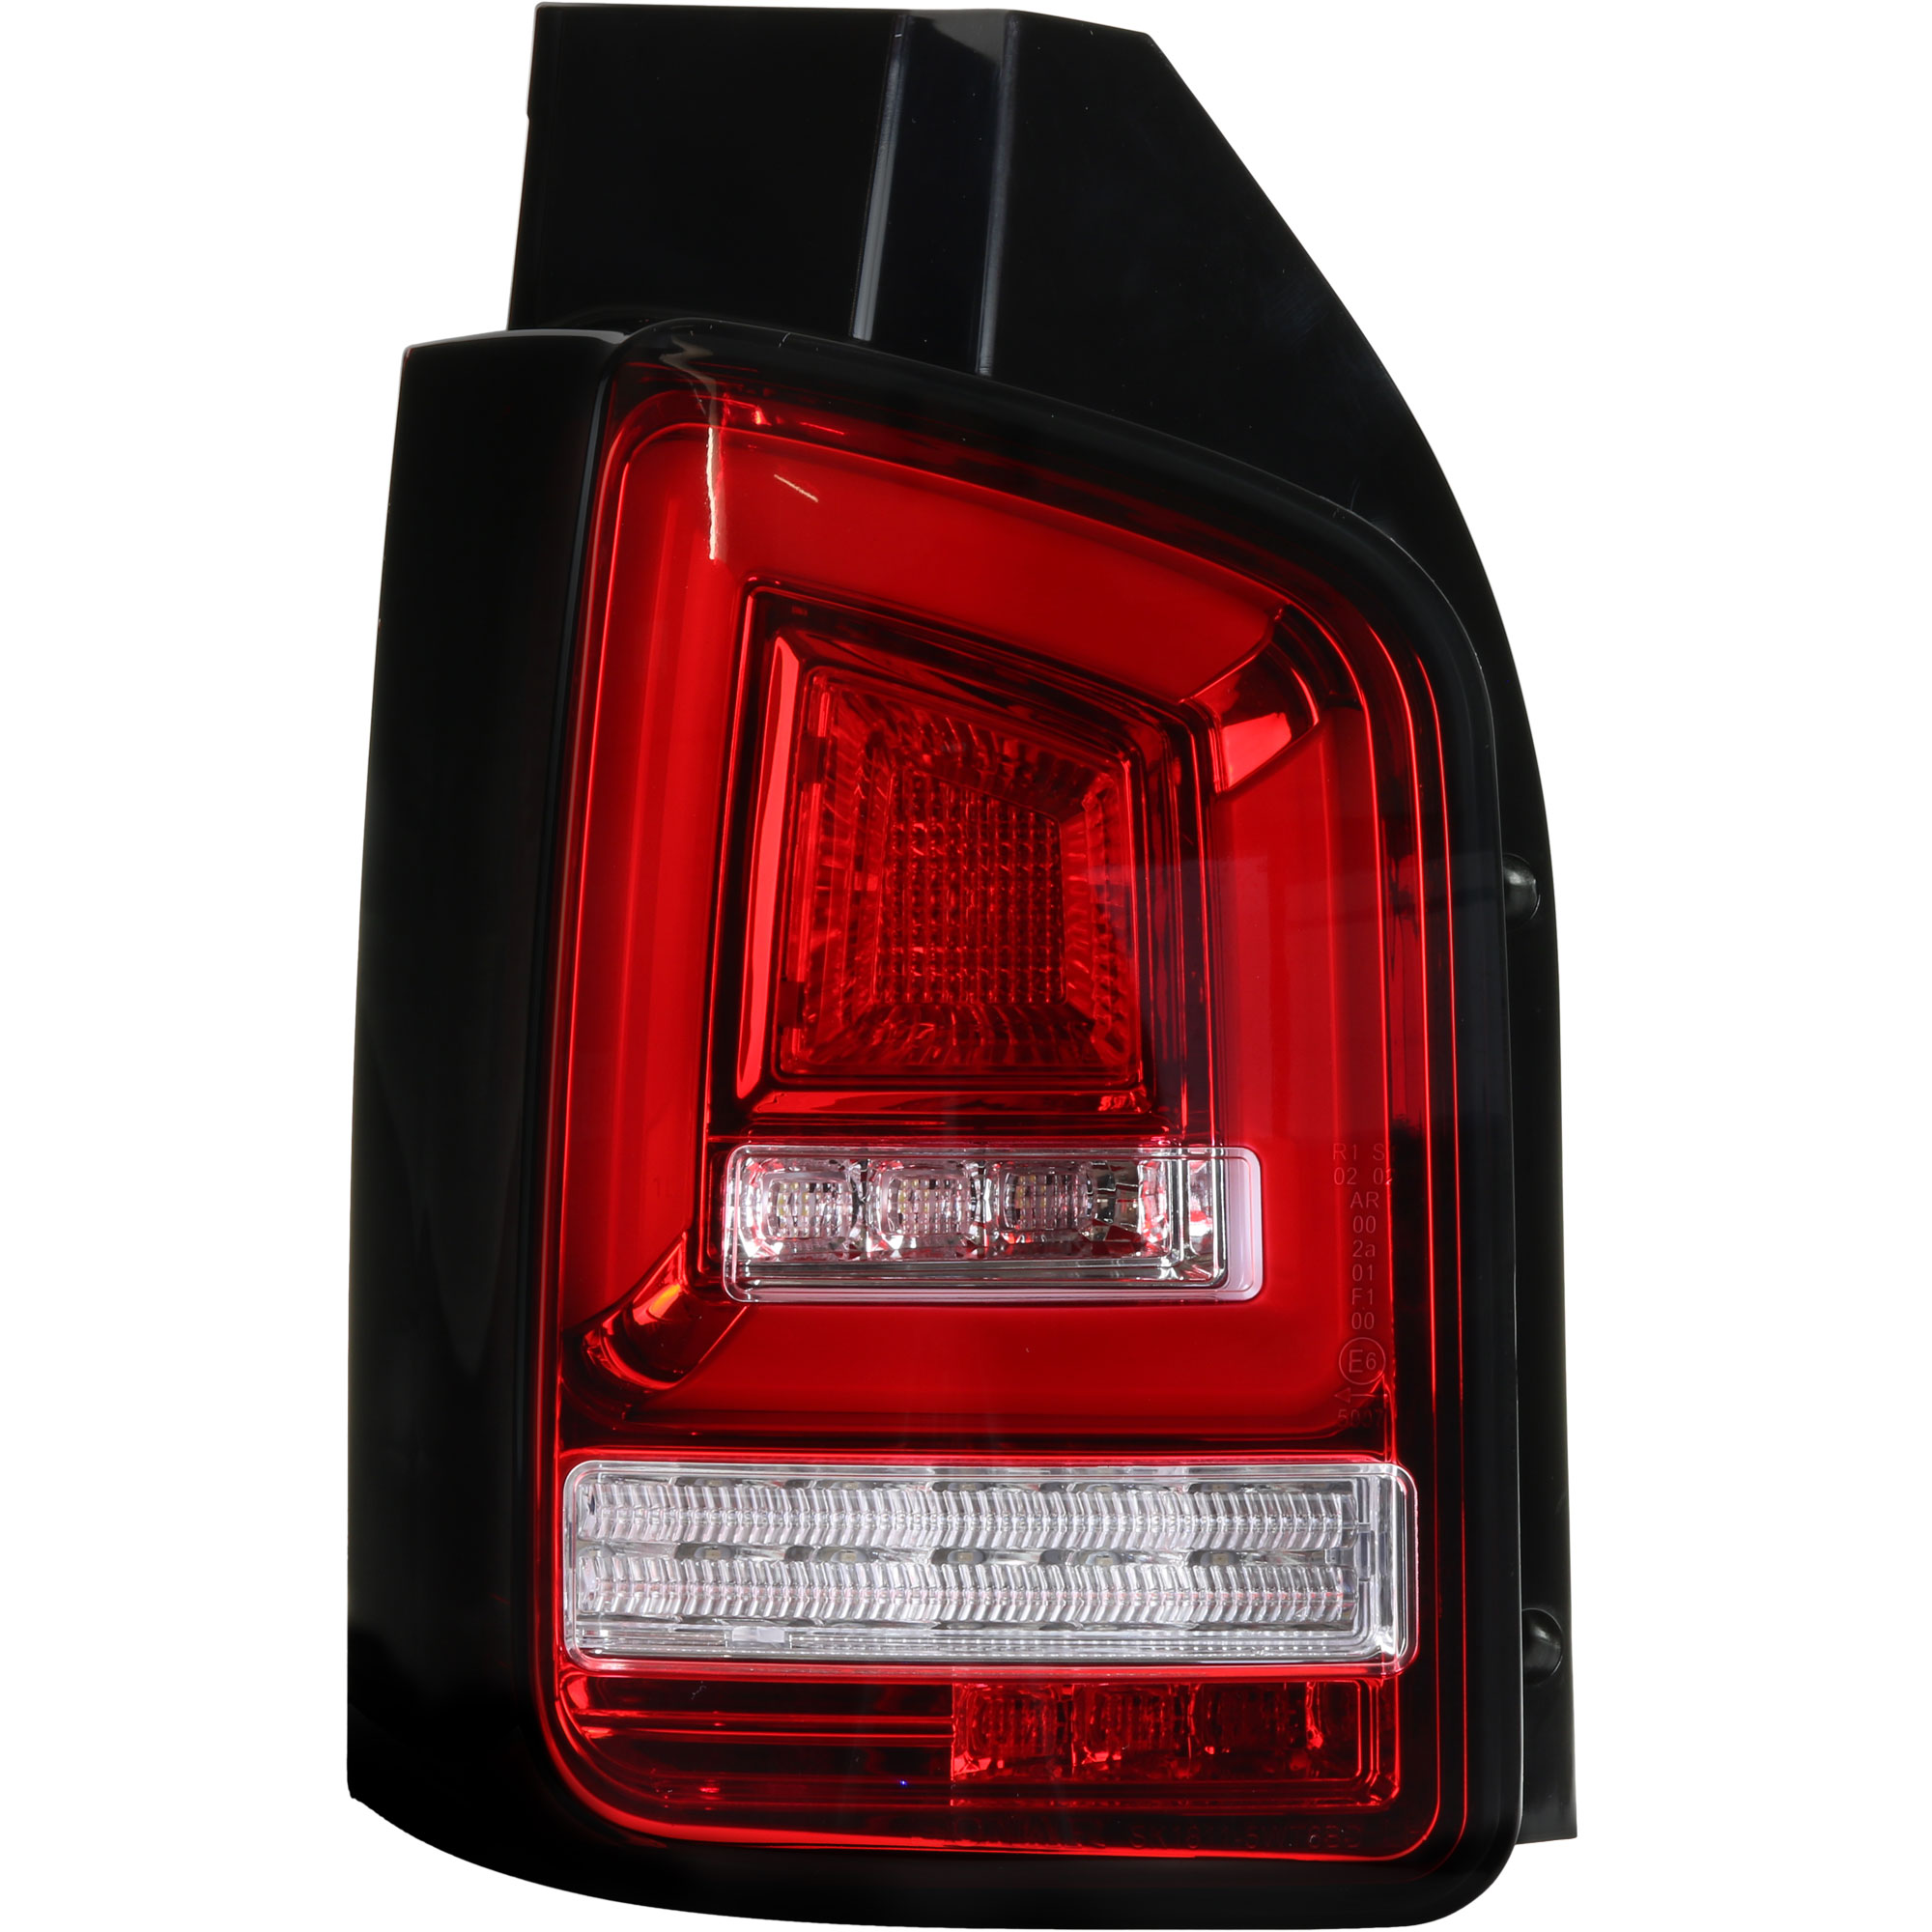 Rückleuchten Set Voll LED Lightbar für VW T5 Bj. 03-09 rot klar für Heckklappe